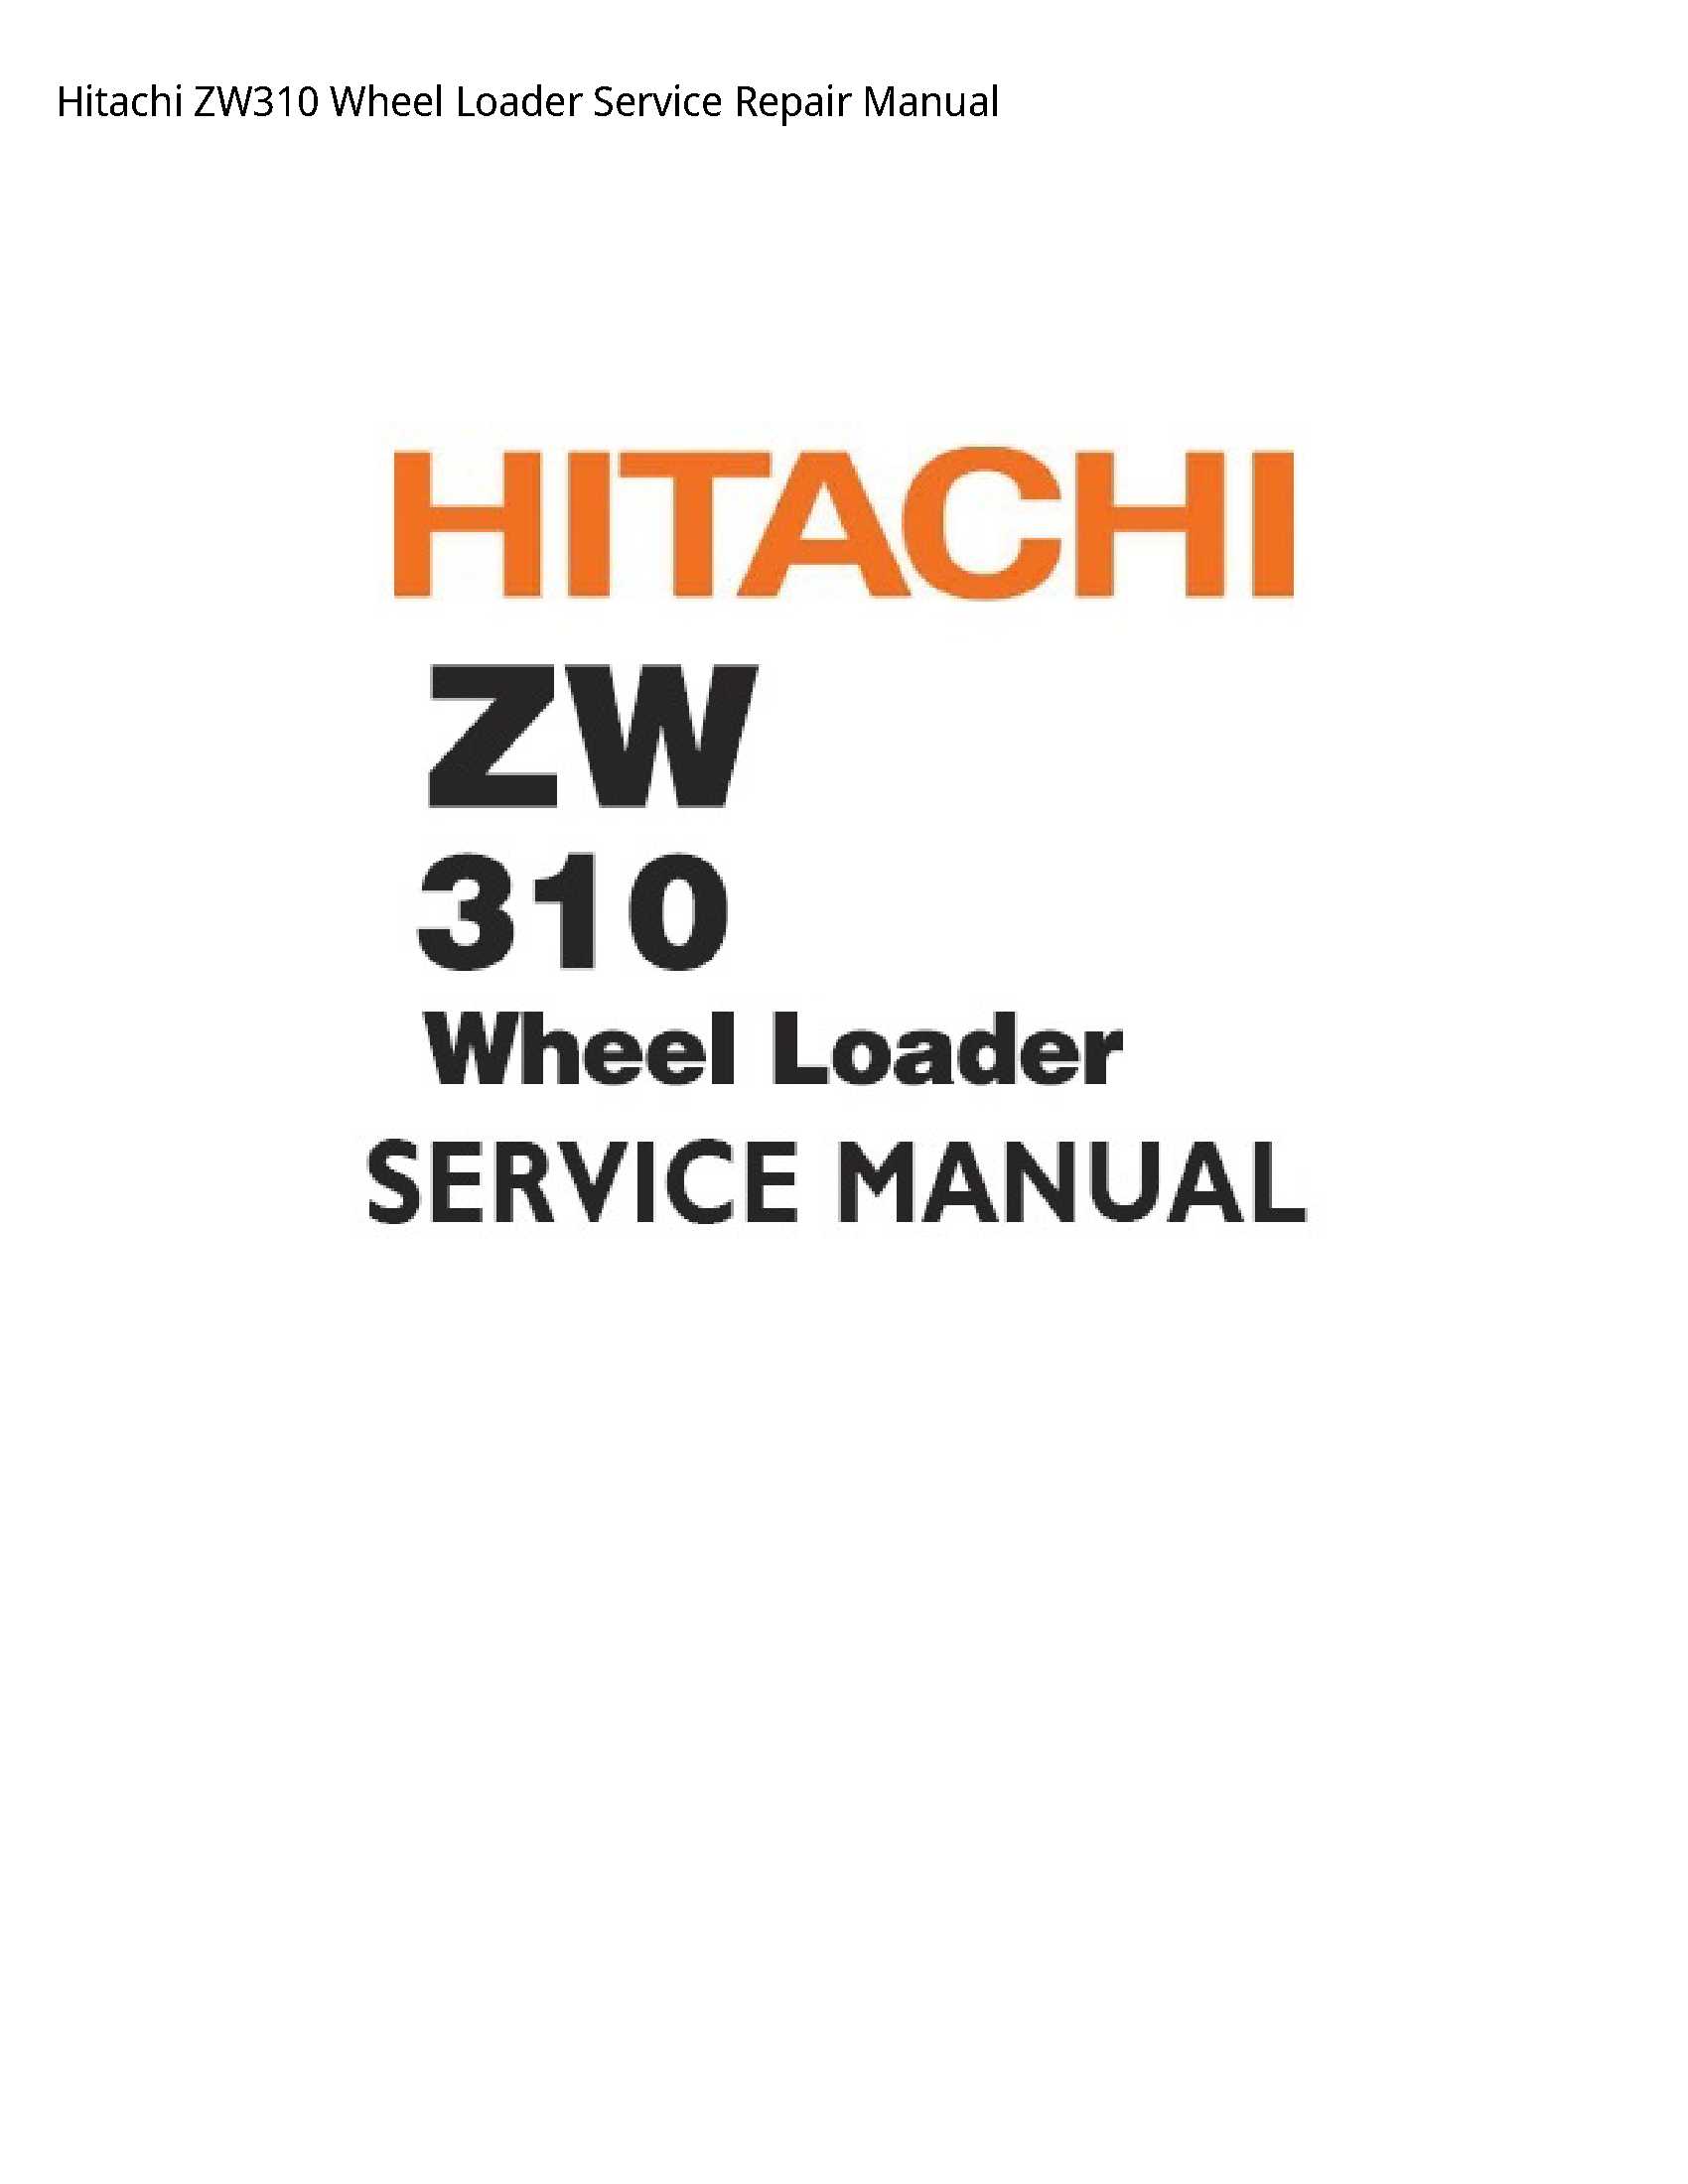 Hitachi ZW310 Wheel Loader manual